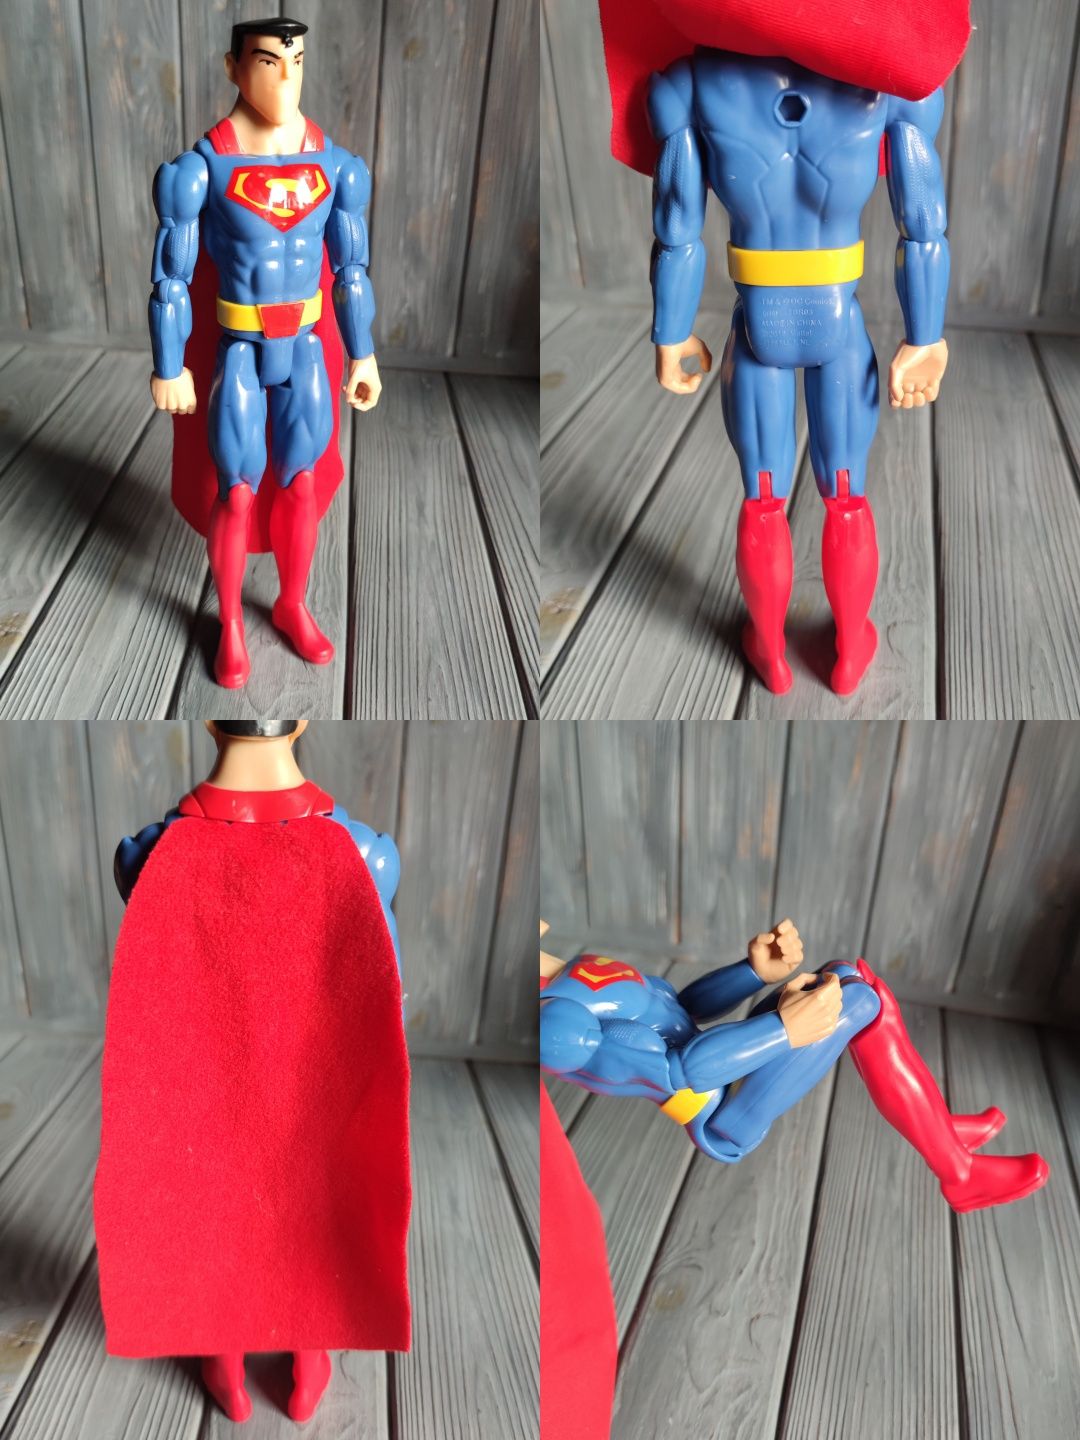 Фігурка Супермен, Людина Павук, Штурмовик Marvel, Hasbro Mattel